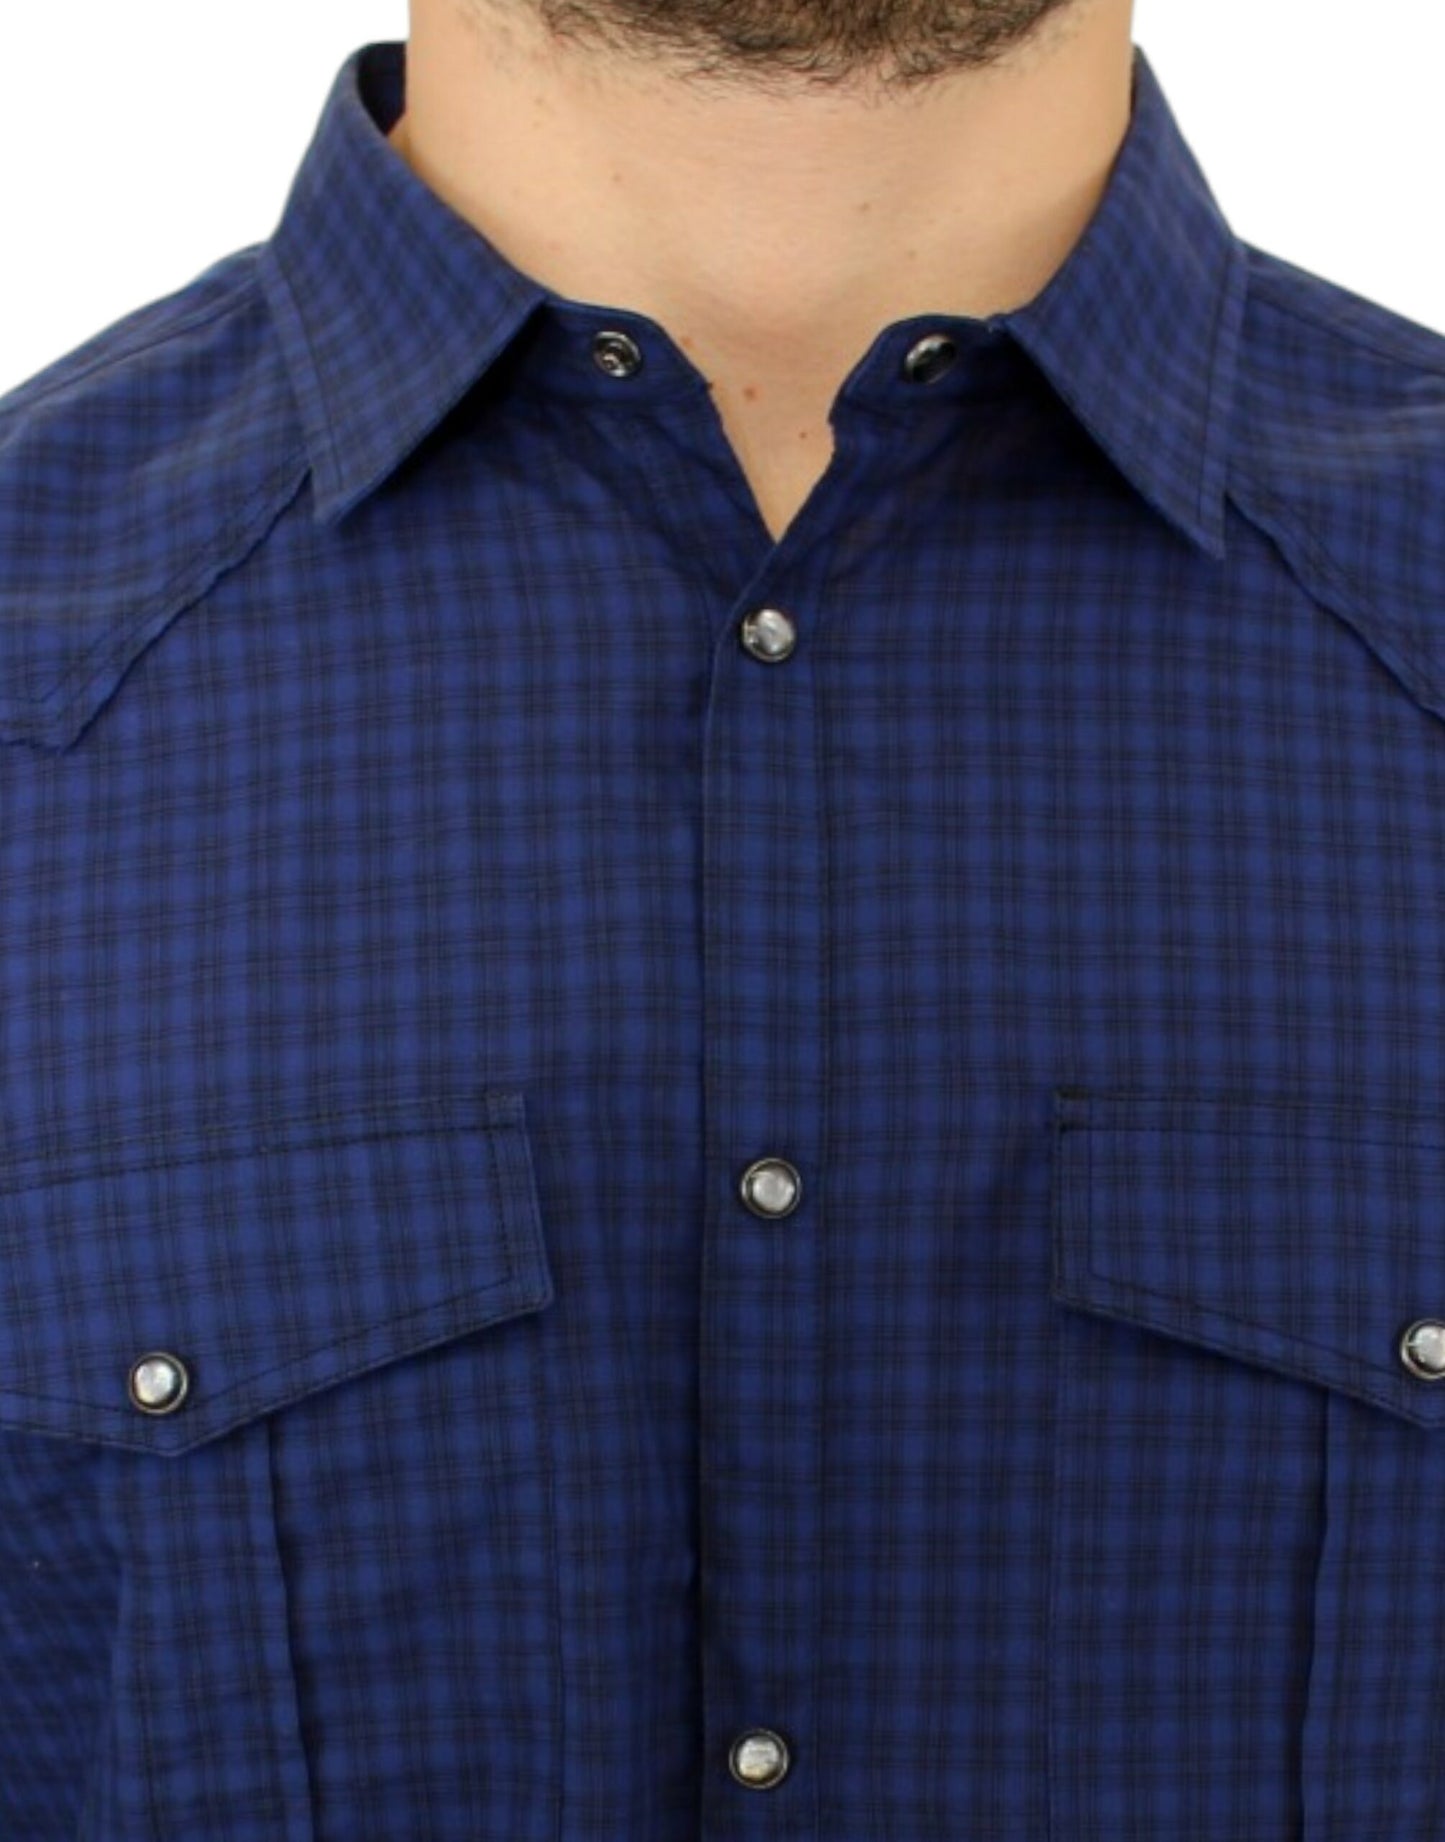 Chic Blue Checkered Casual Cotton Shirt